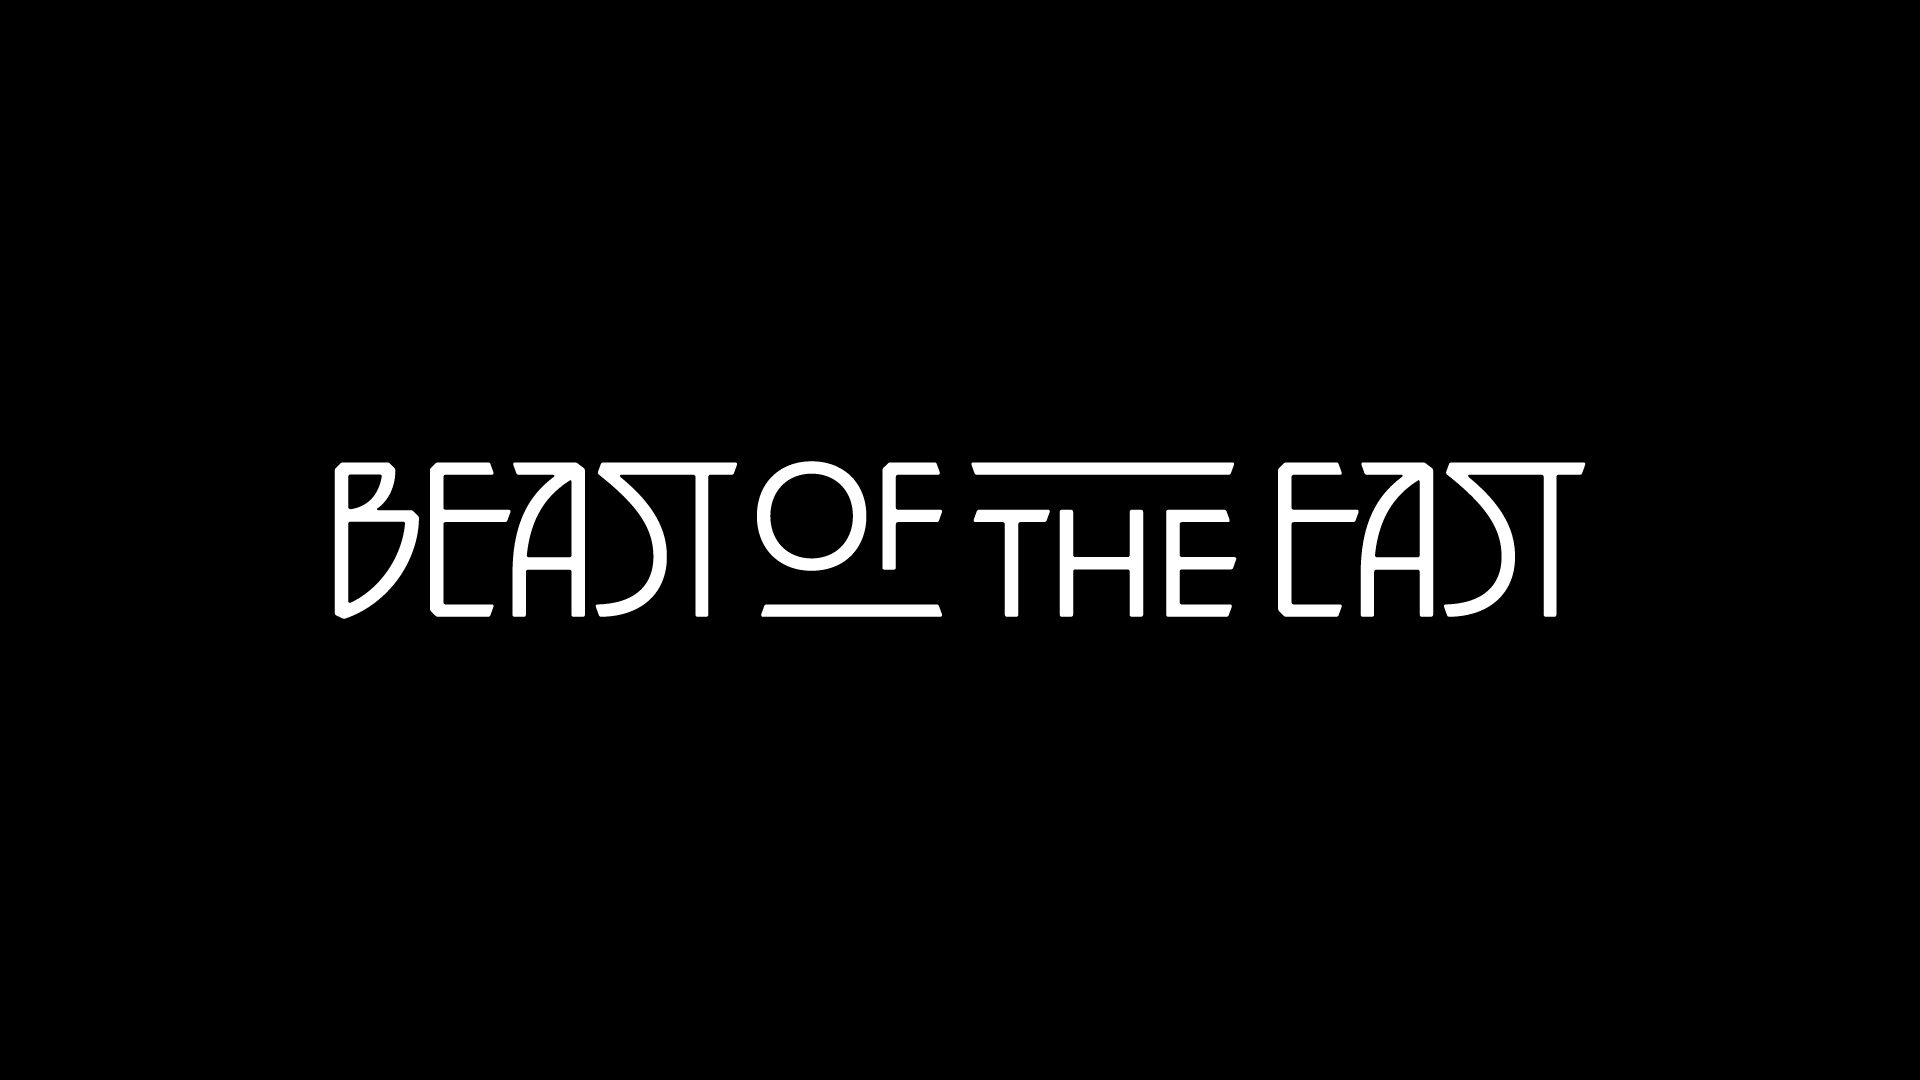 Branding: Beast Of The East